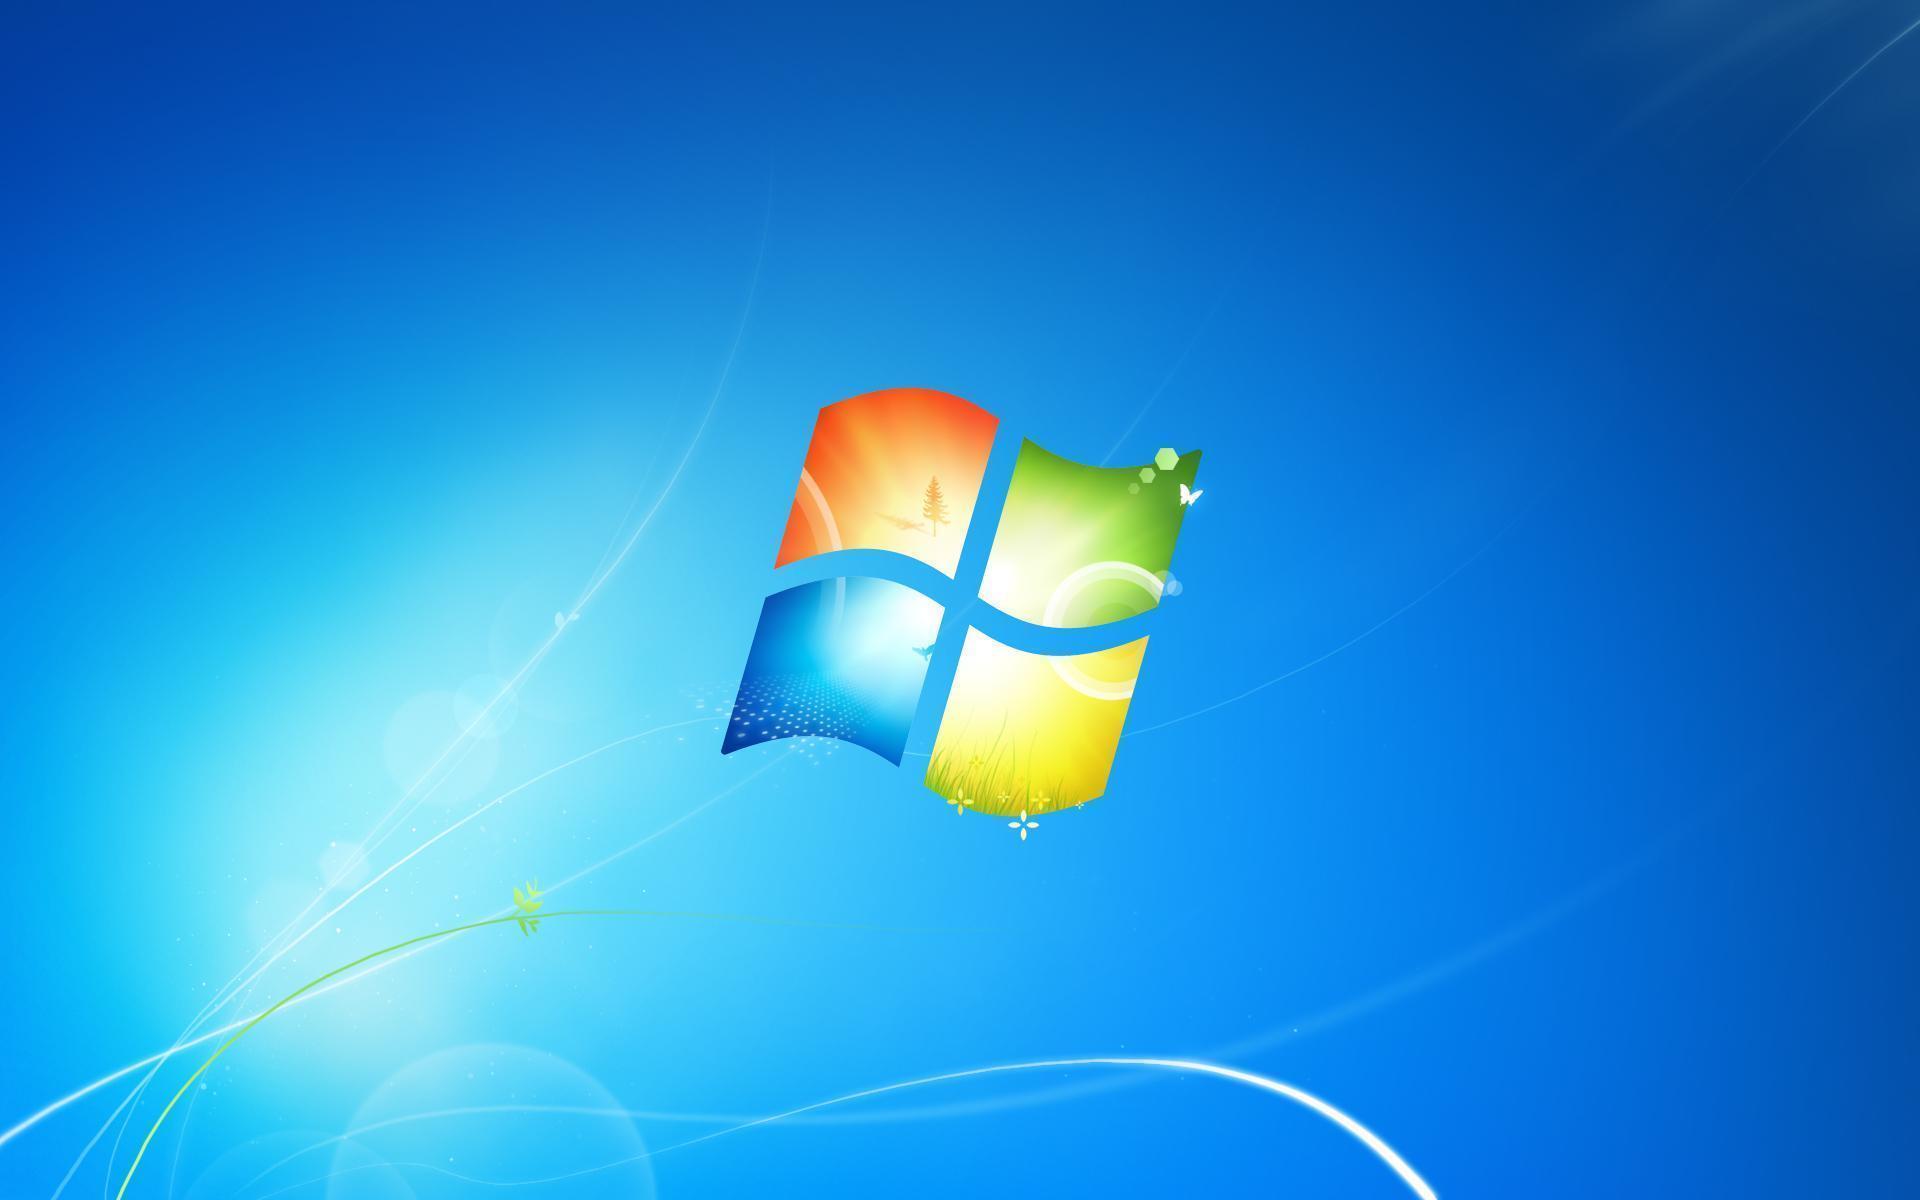 Windows 7 Original HD Wallpaper For Desktop Background